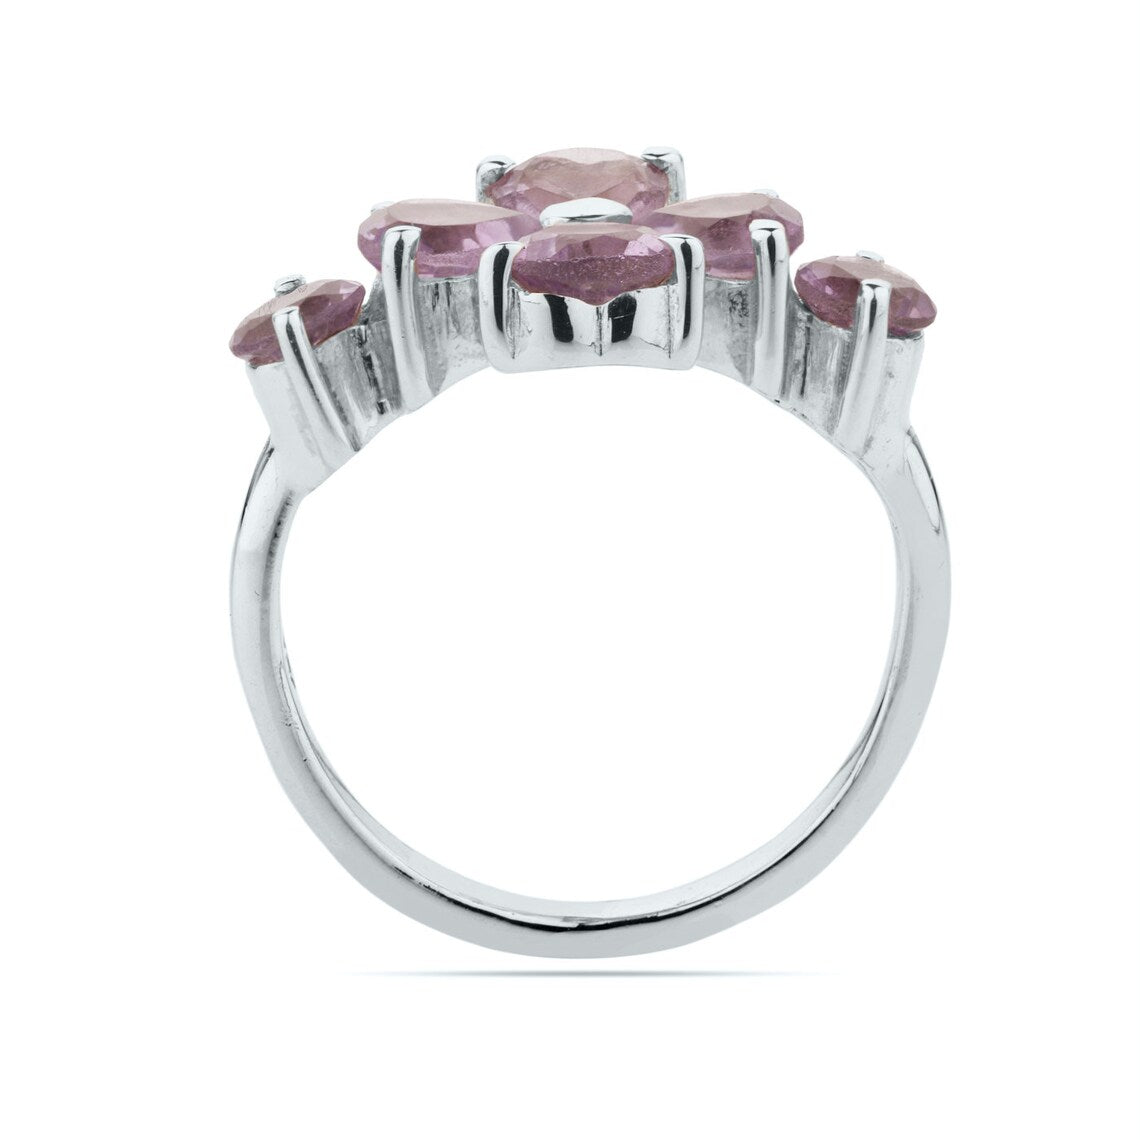 Amethyst Prong set Ring - Amethyst Gemstone Ring - 925 Sterling Silver Amethyst Ring - Multi Amethyst Silver Ring